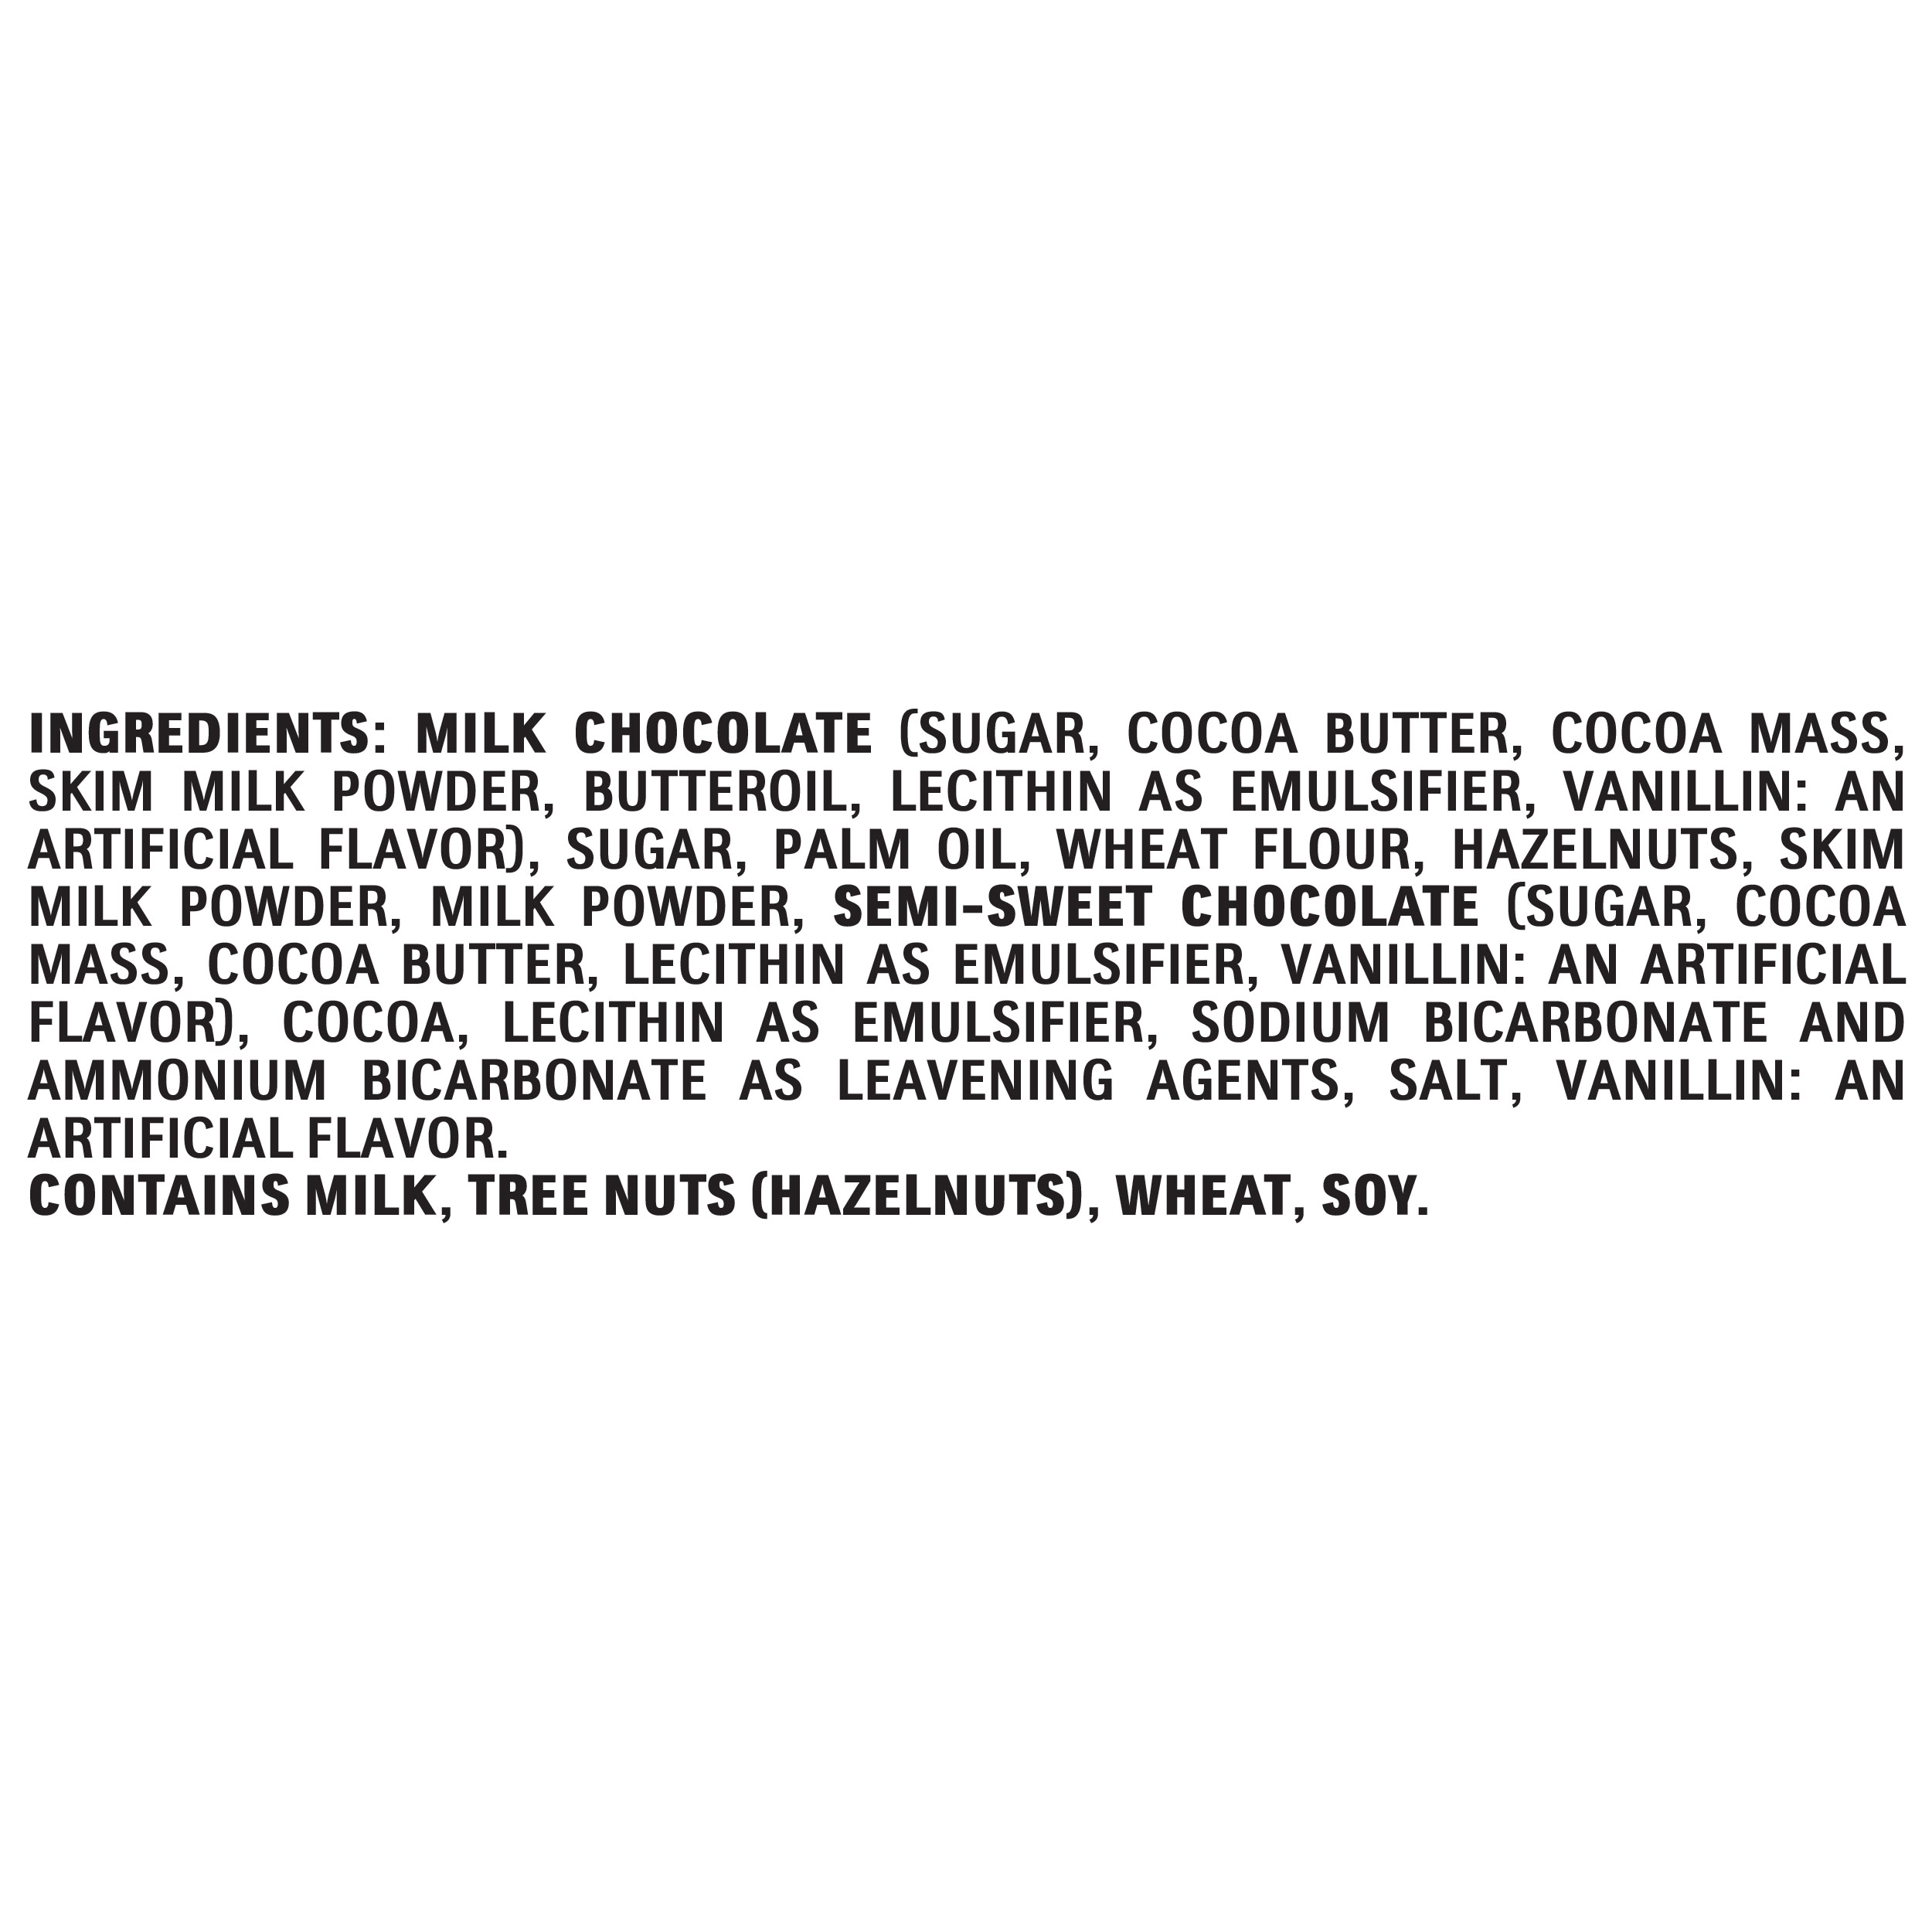 Kinder Bueno Mini, Milk Chocolate and Hazelnut Cream, Easter Basket Stuffers, 5.7 oz - image 11 of 11